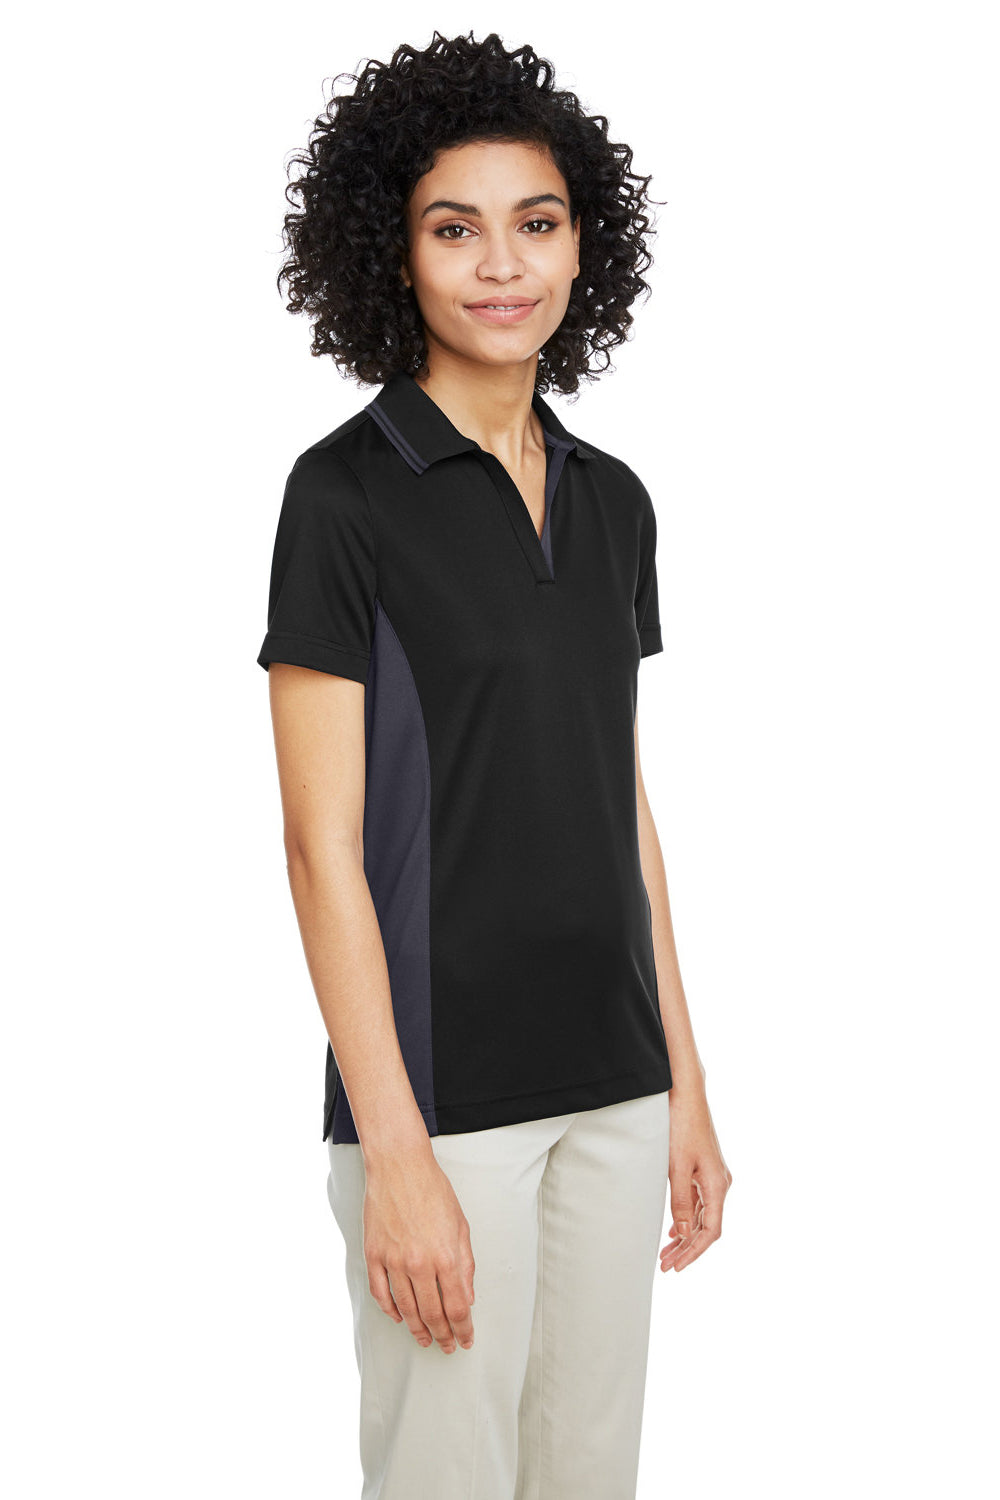 Harriton M386W Womens Flash Performance Moisture Wicking Colorblock Short Sleeve Polo Shirt Black/Dark Charcoal Grey 3Q